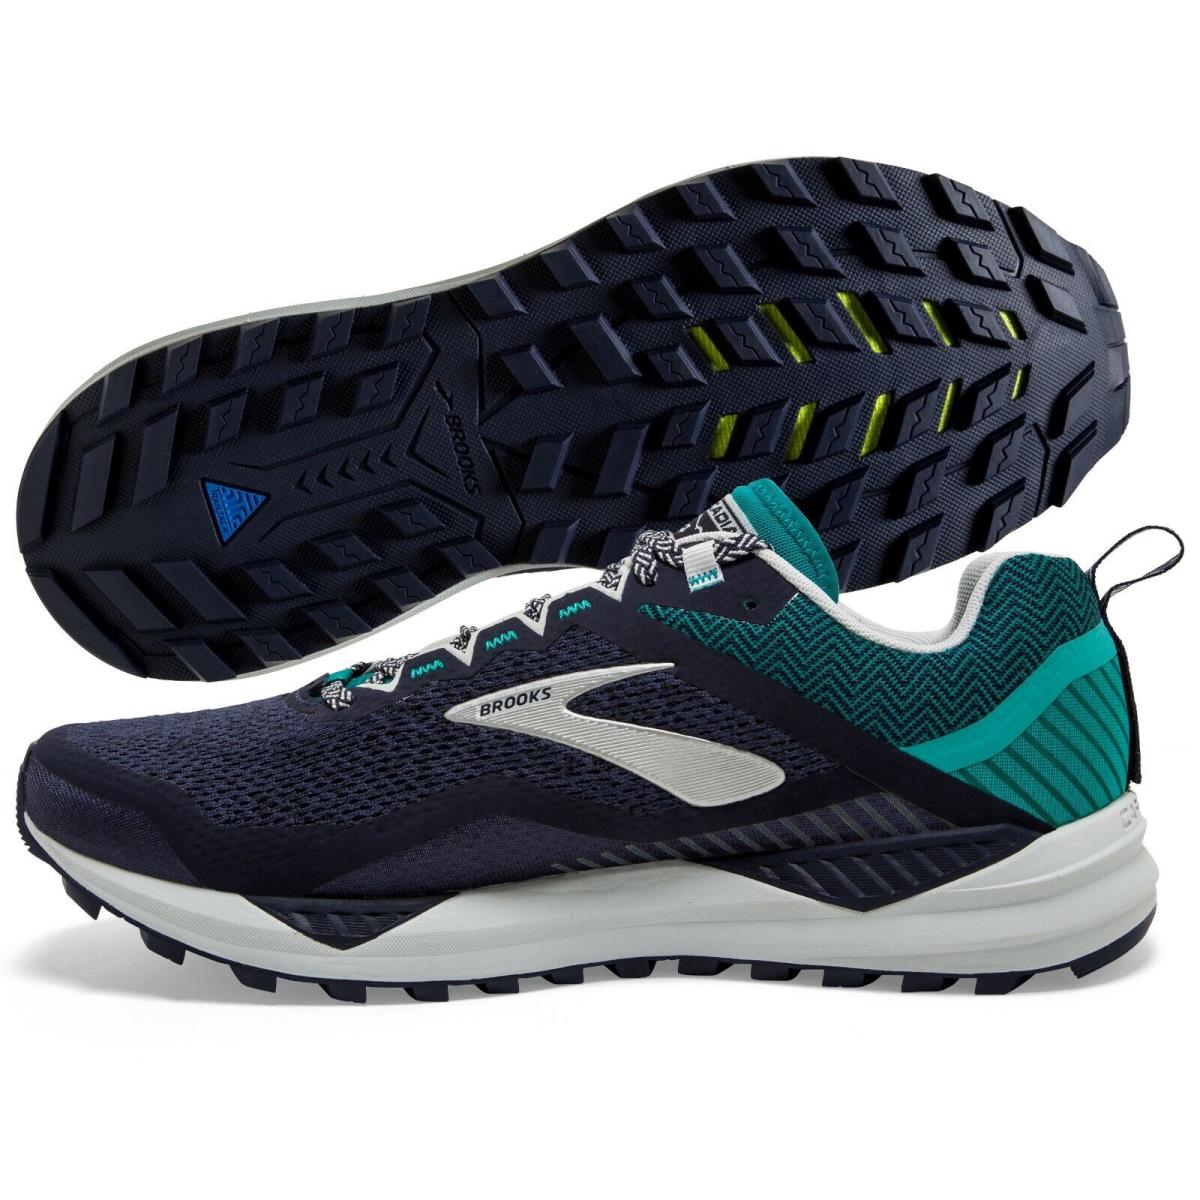 Brooks Cascadia 14 Running Shoes Navy/blue Grass/grey Mens Size 12 D M - Navy